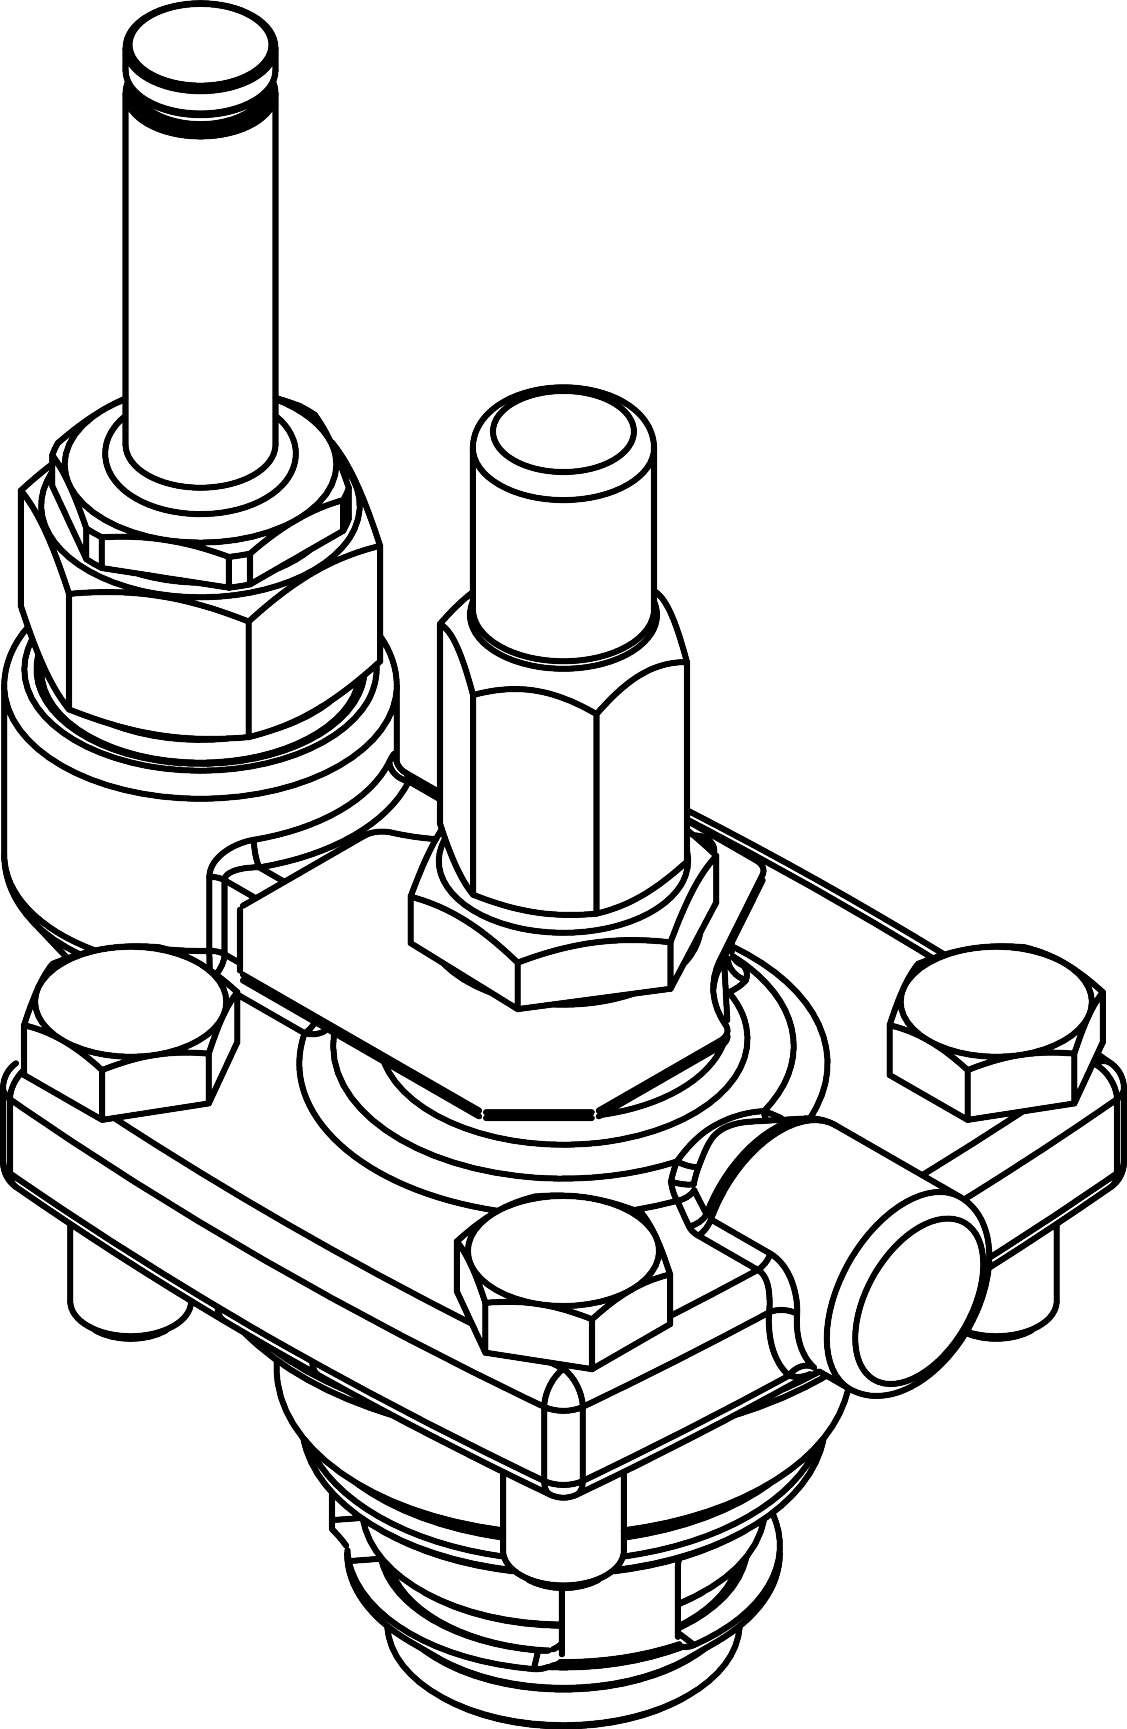 ICFC 25 - 40, Check valve module